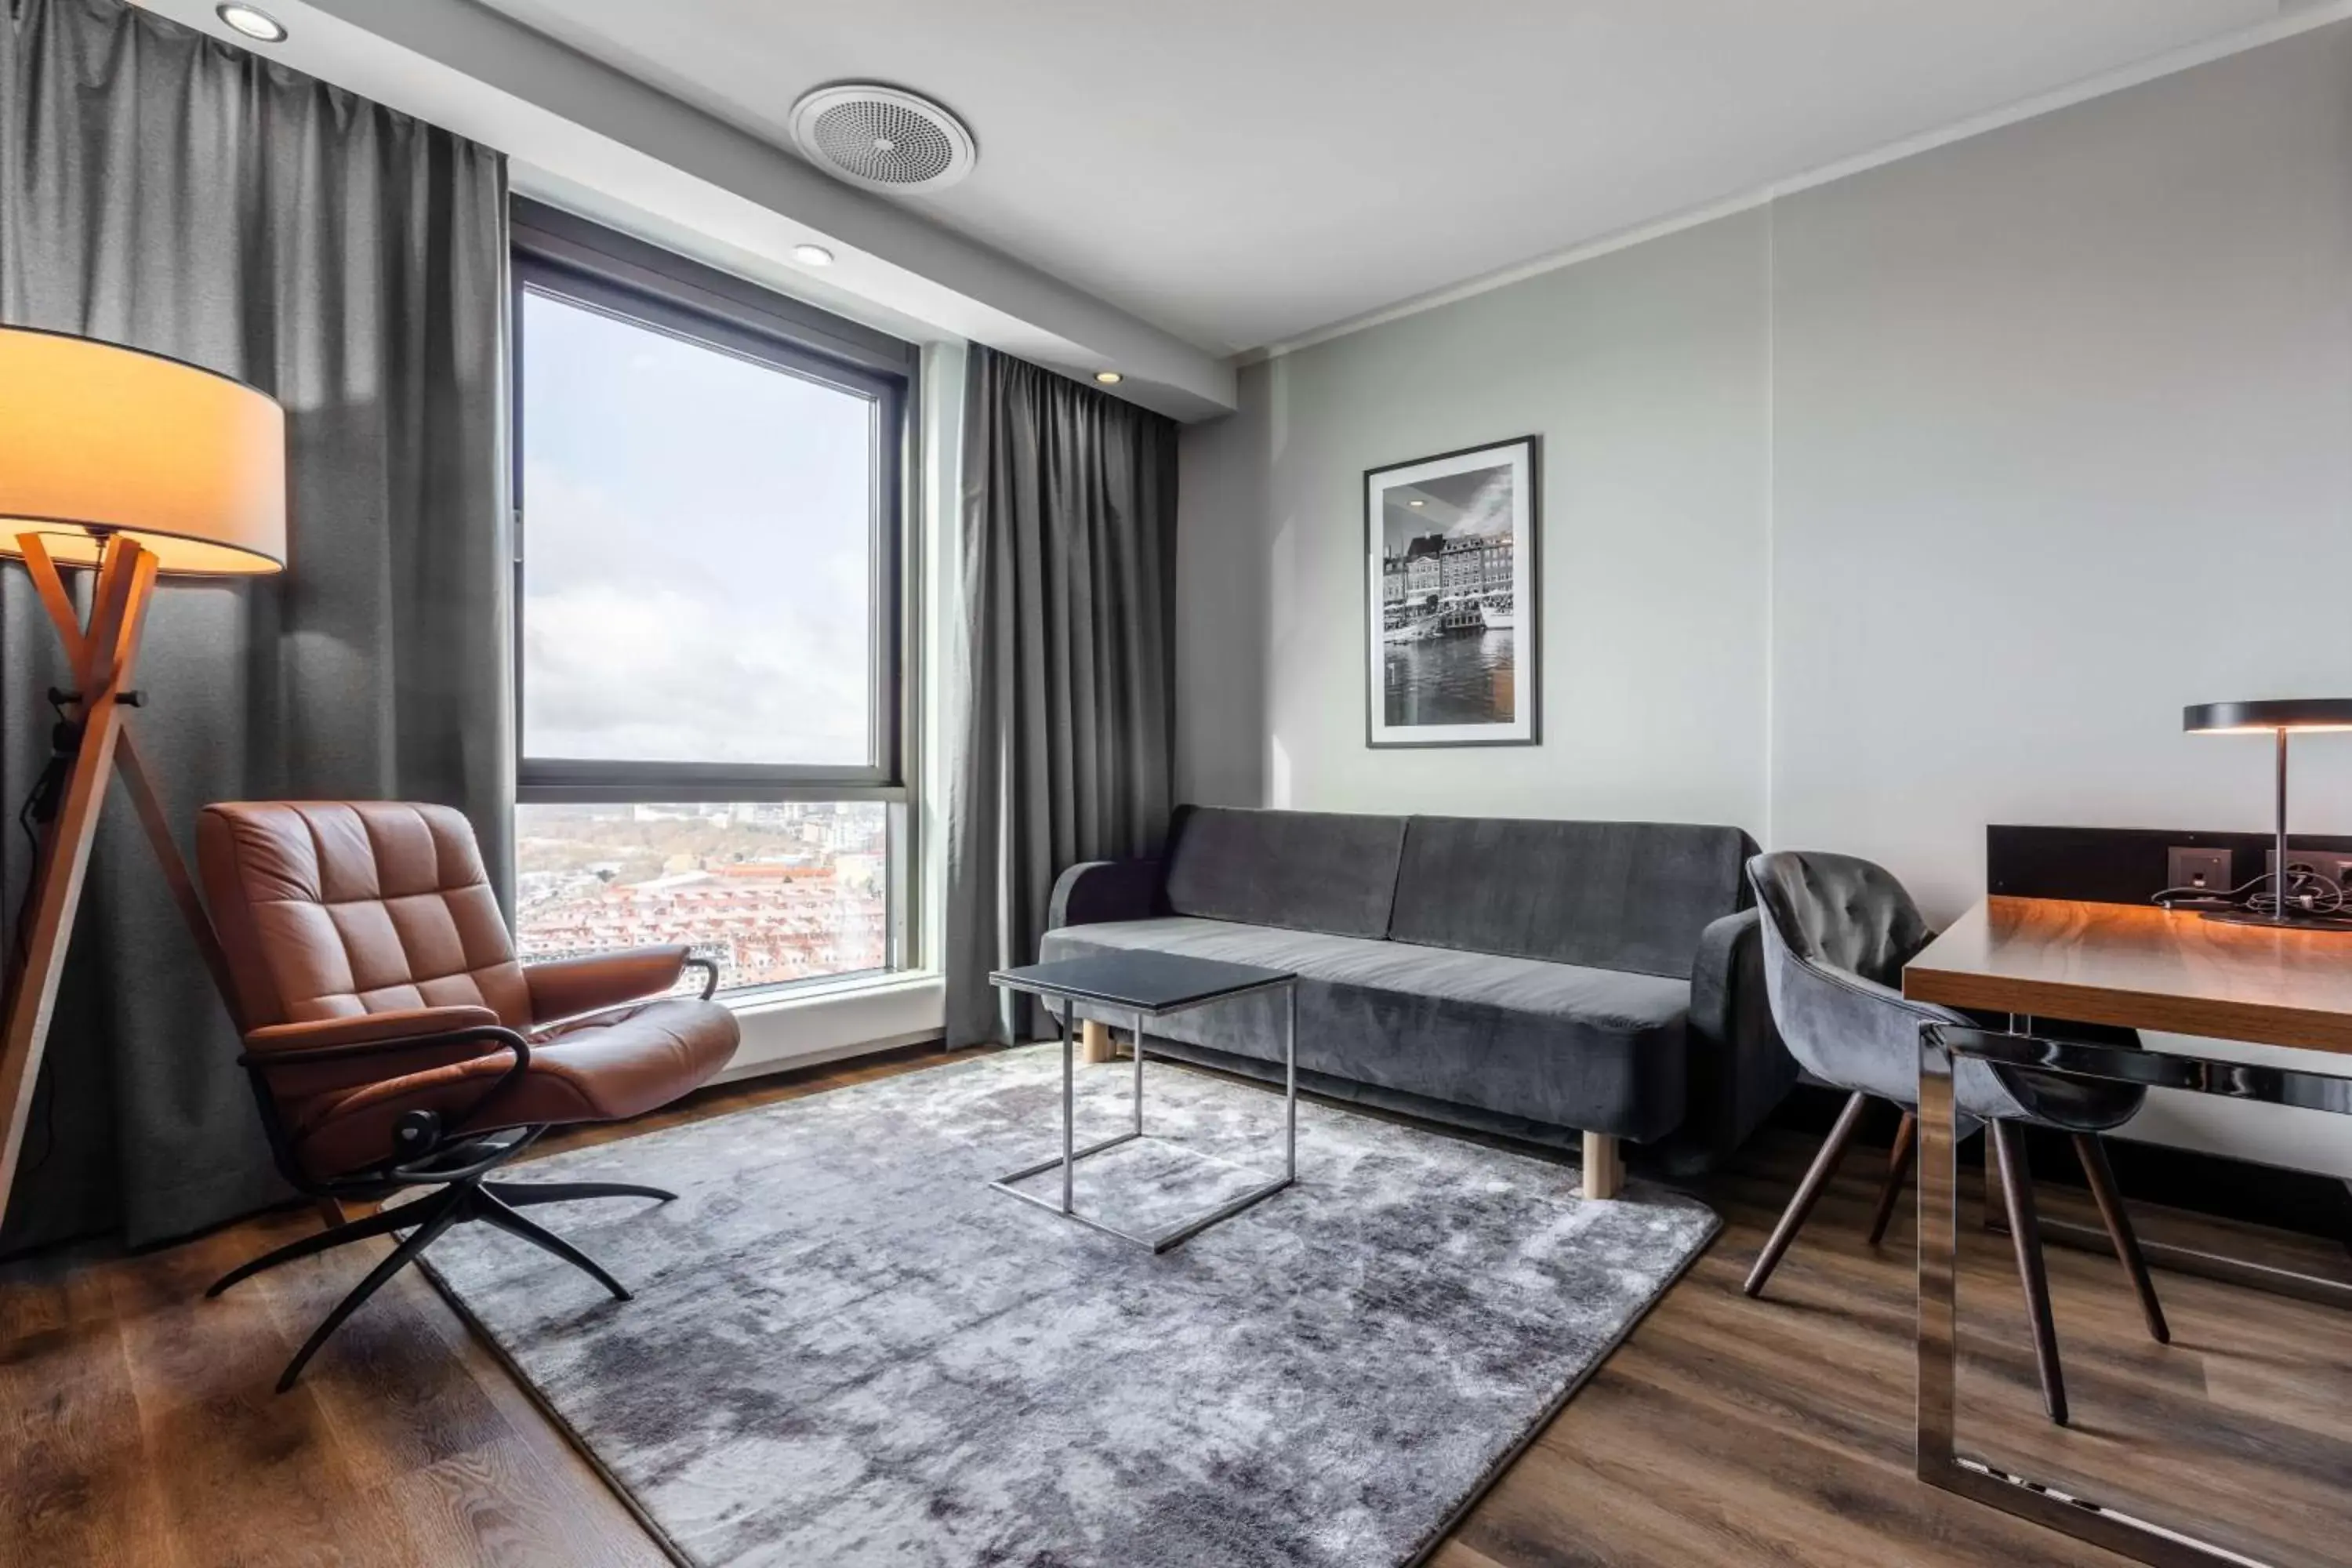 Photo of the whole room, Seating Area in Radisson Blu Scandinavia Hotel, Copenhagen